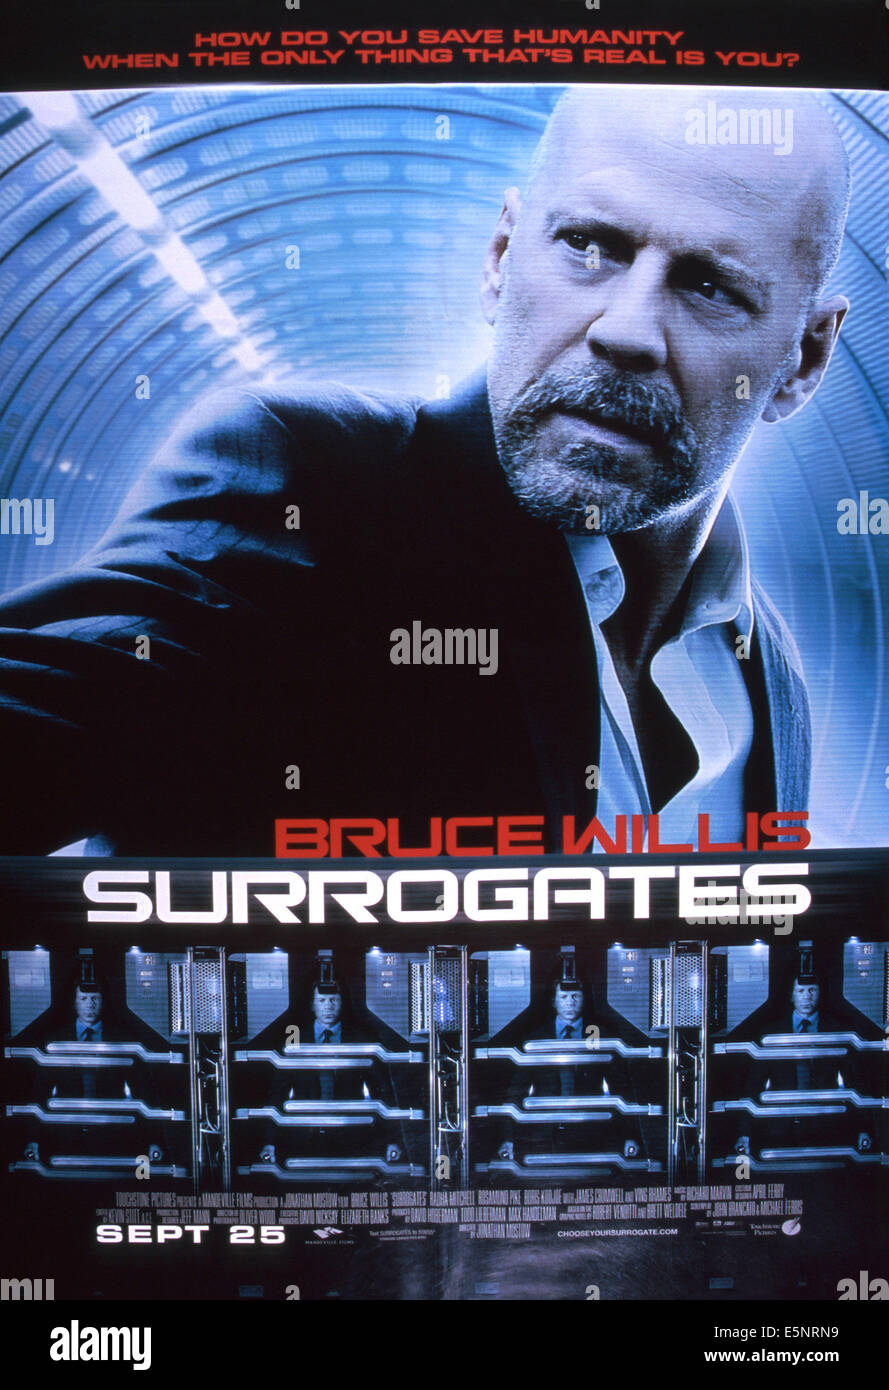 SURROGATES, US advance poster art, Bruce Willis, 2009. ©Walt Disney Studios Motion Pictures/Courtesy Everett Collection Stock Photo